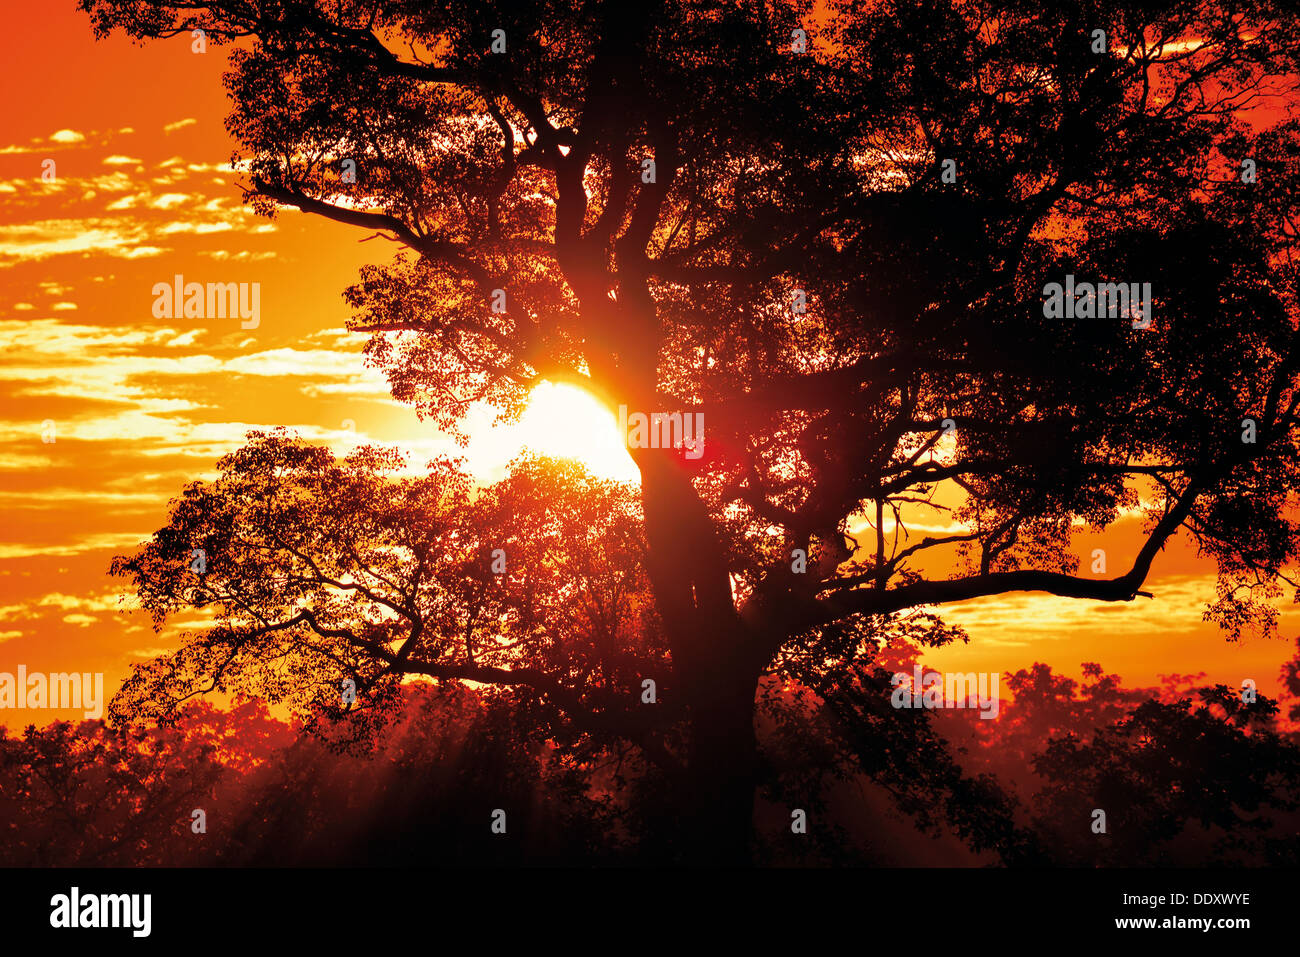 Brazil, Pantanal: Scenic sunset with tree silhouette Stock Photo